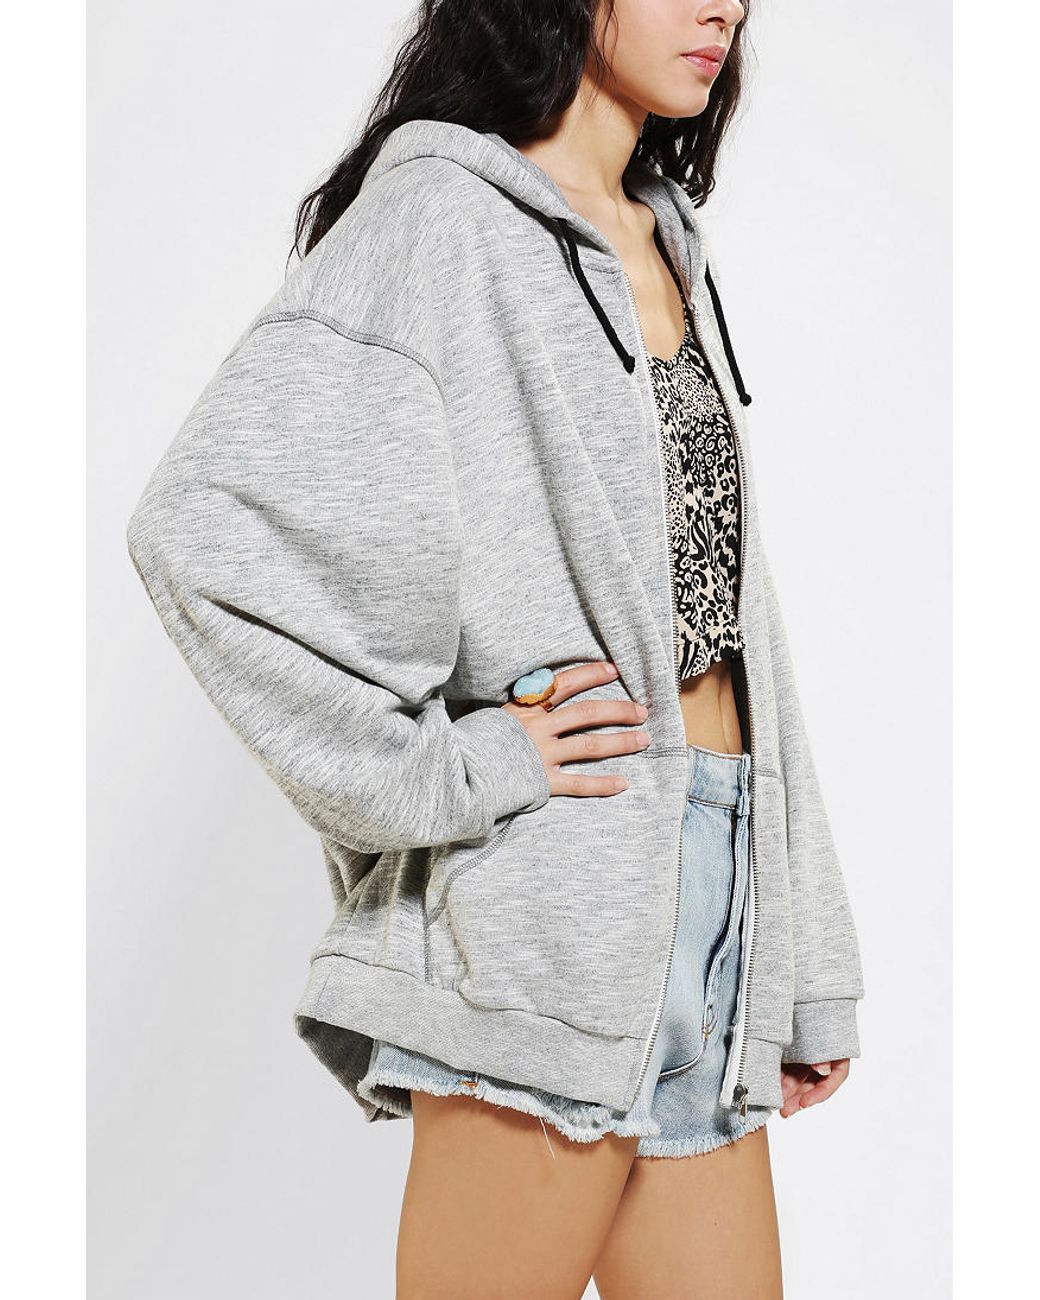 Urban Outfitters Bdg Grinded Oversized Zipup Hoodie Sweatshirt in Grey  (Gray) | Lyst